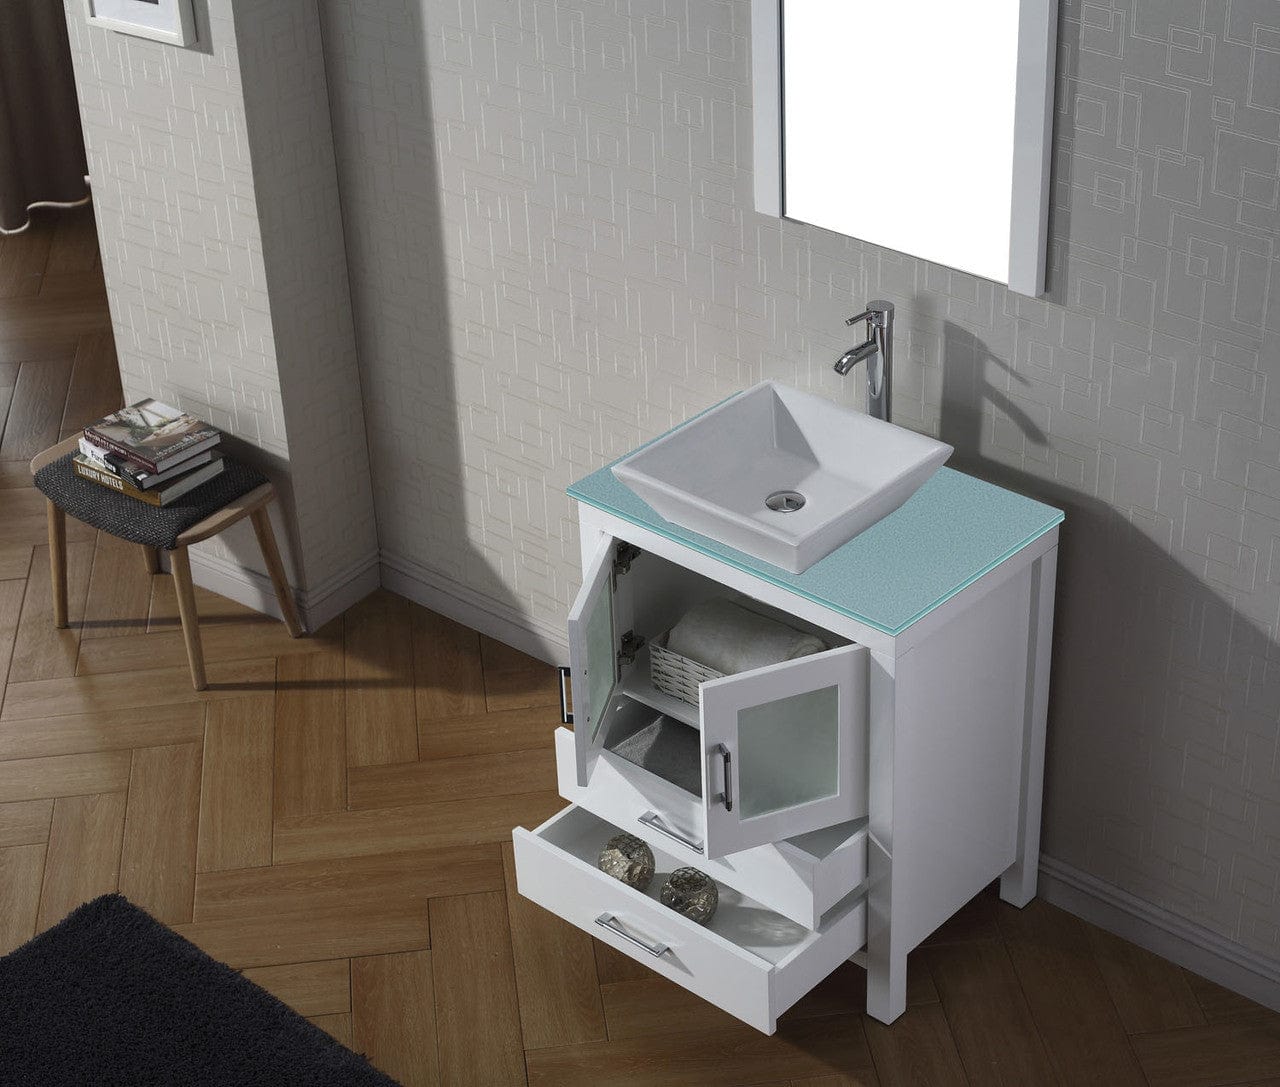 Virtu USA Dior 28 Single Bathroom Vanity in White w/ Aqua Tempered Glass Top & Square Sink